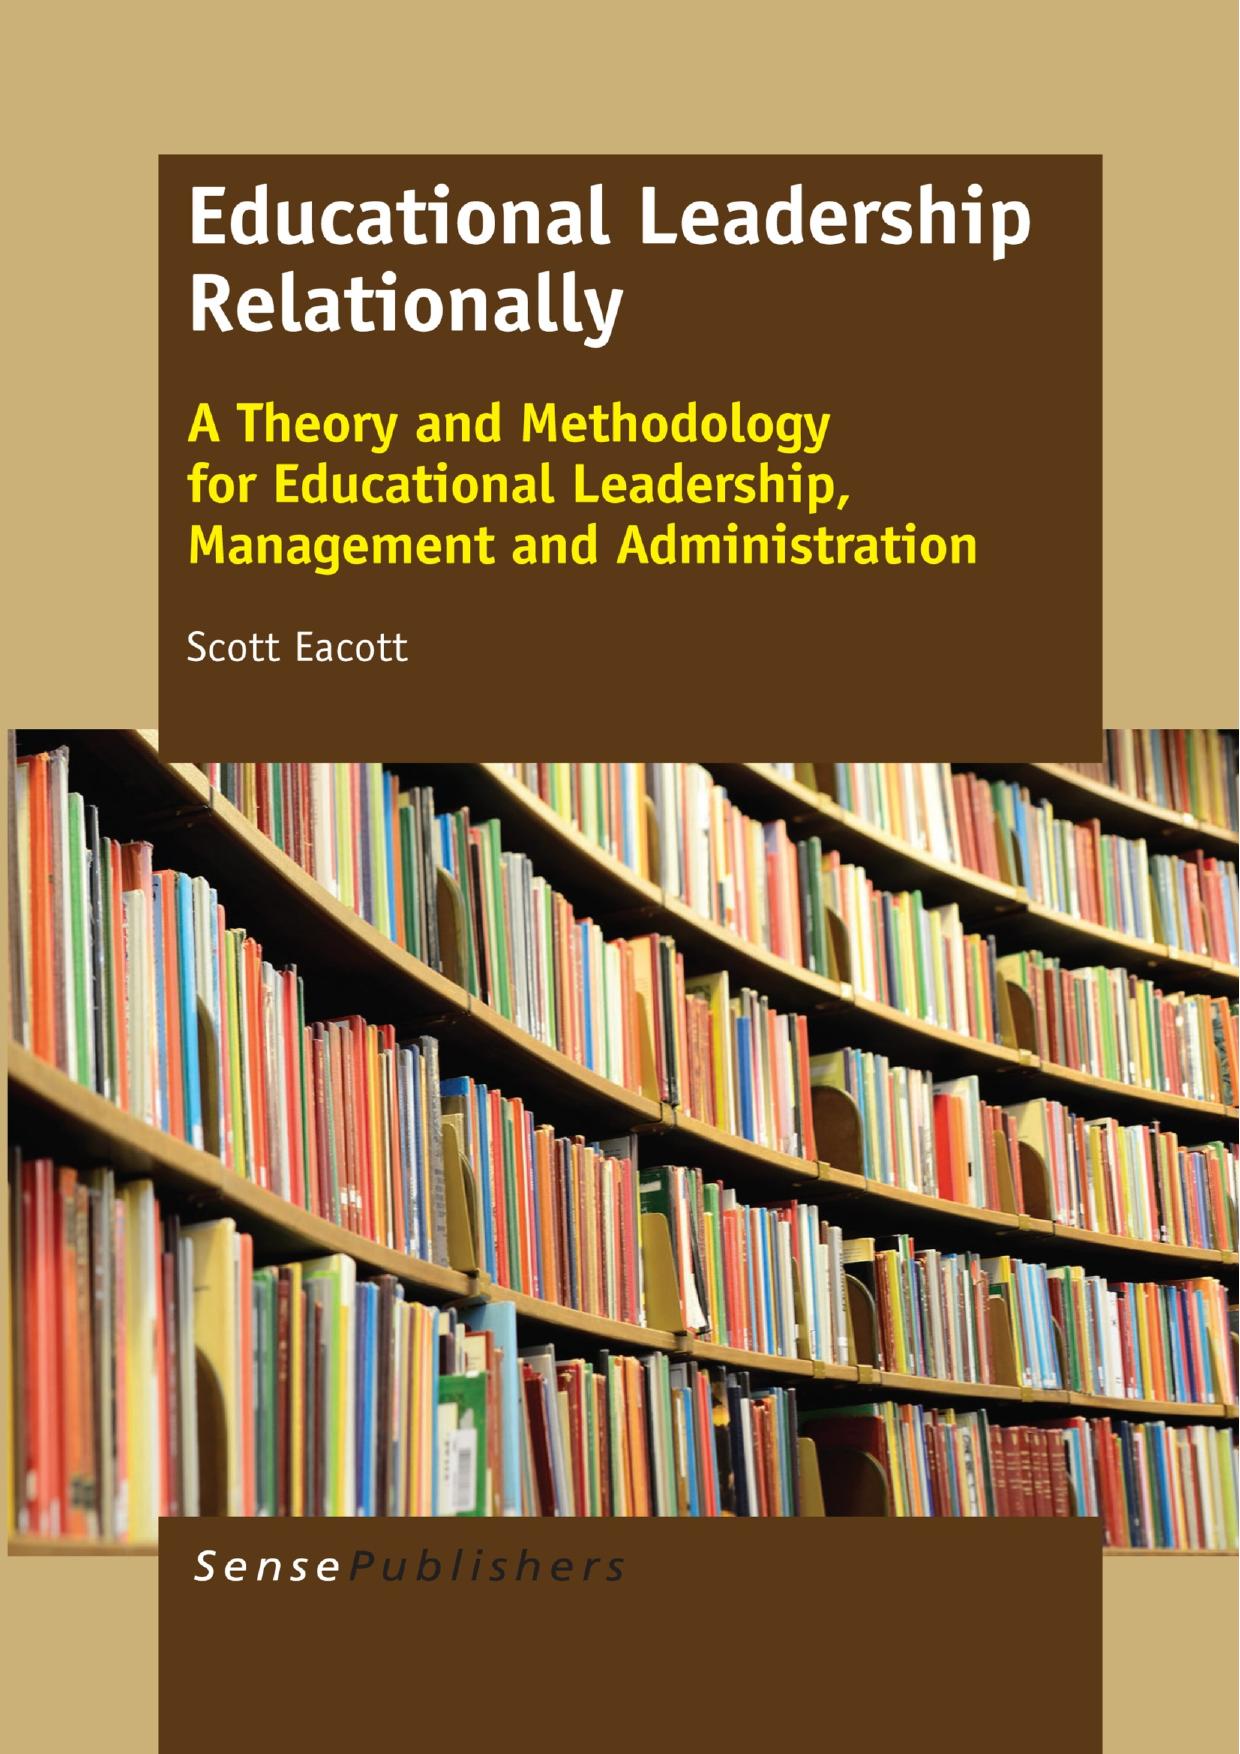 Educational Leadership Relationally 2015